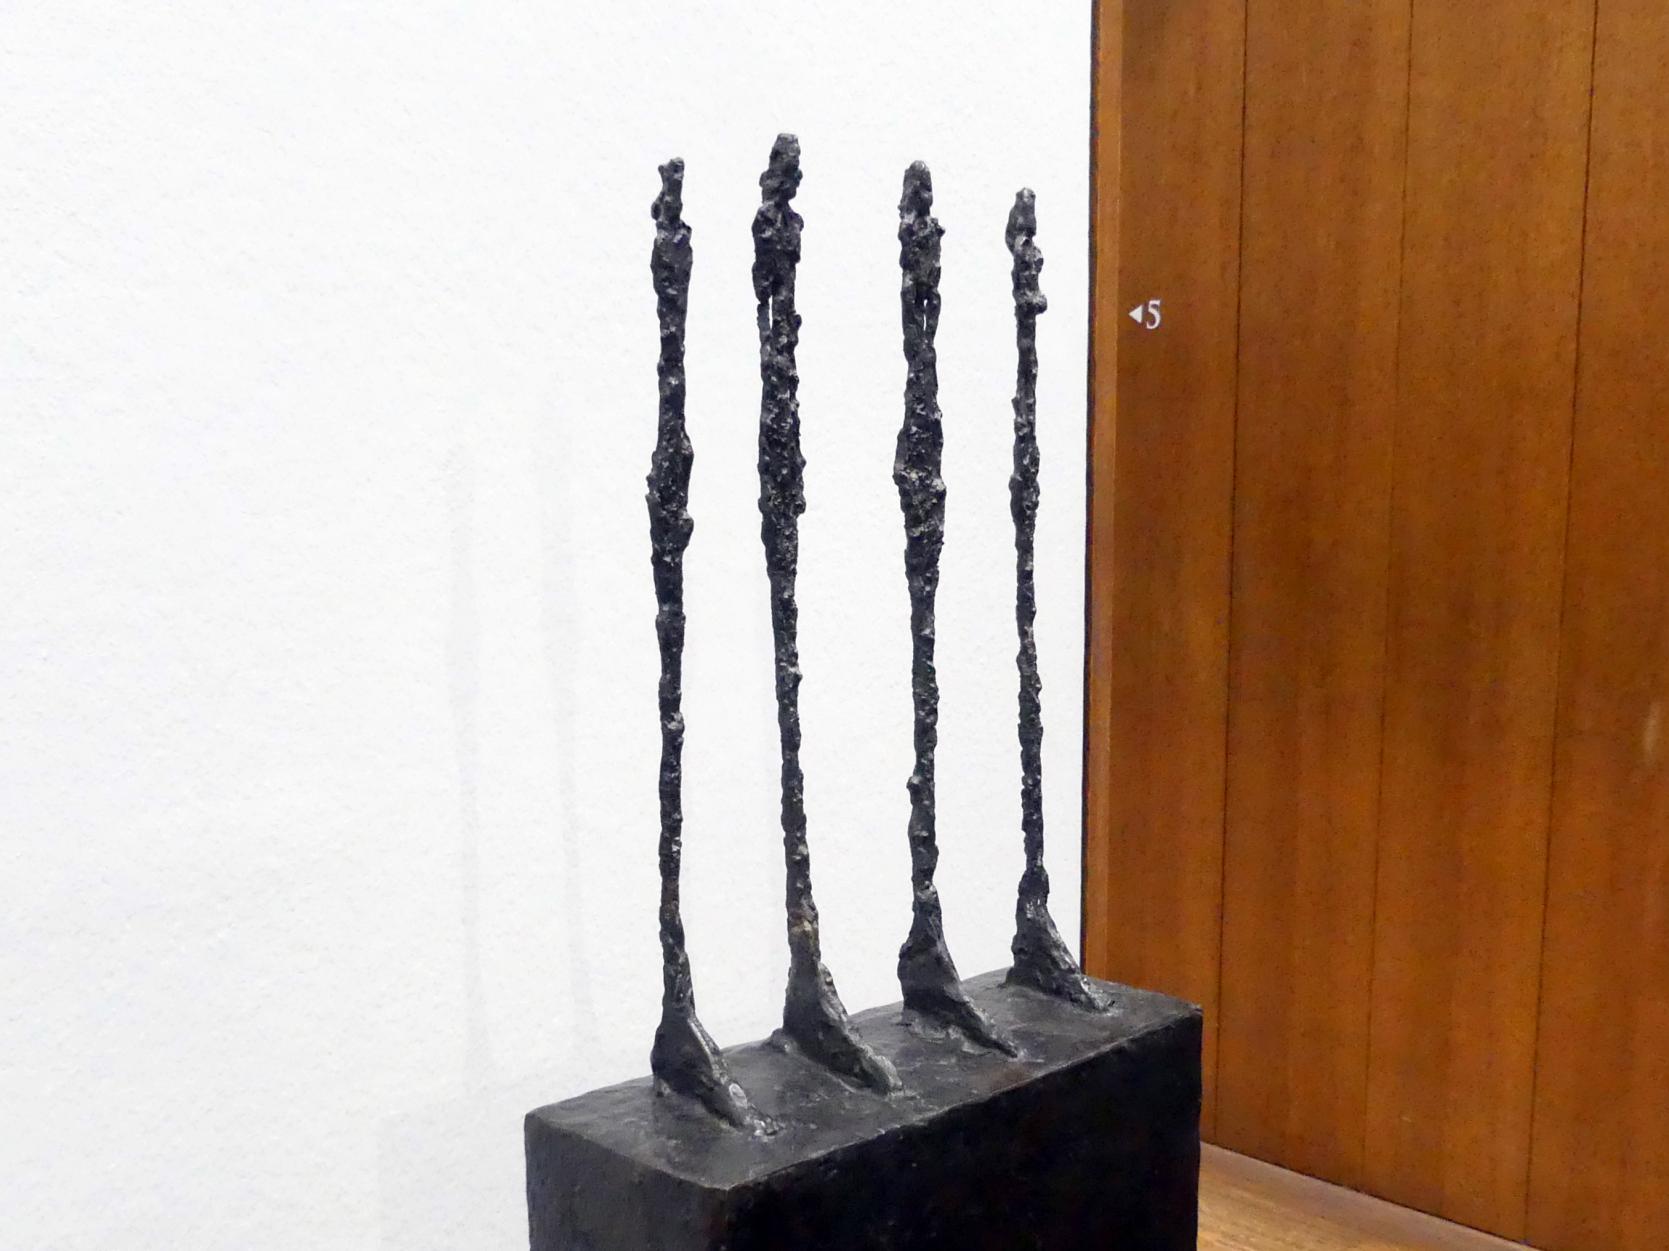 Alberto Giacometti (1914–1965), Vier Frauen auf Sockel, Wien, Albertina, Sammlung Batliner, Saal 7, 1950, Bild 3/4